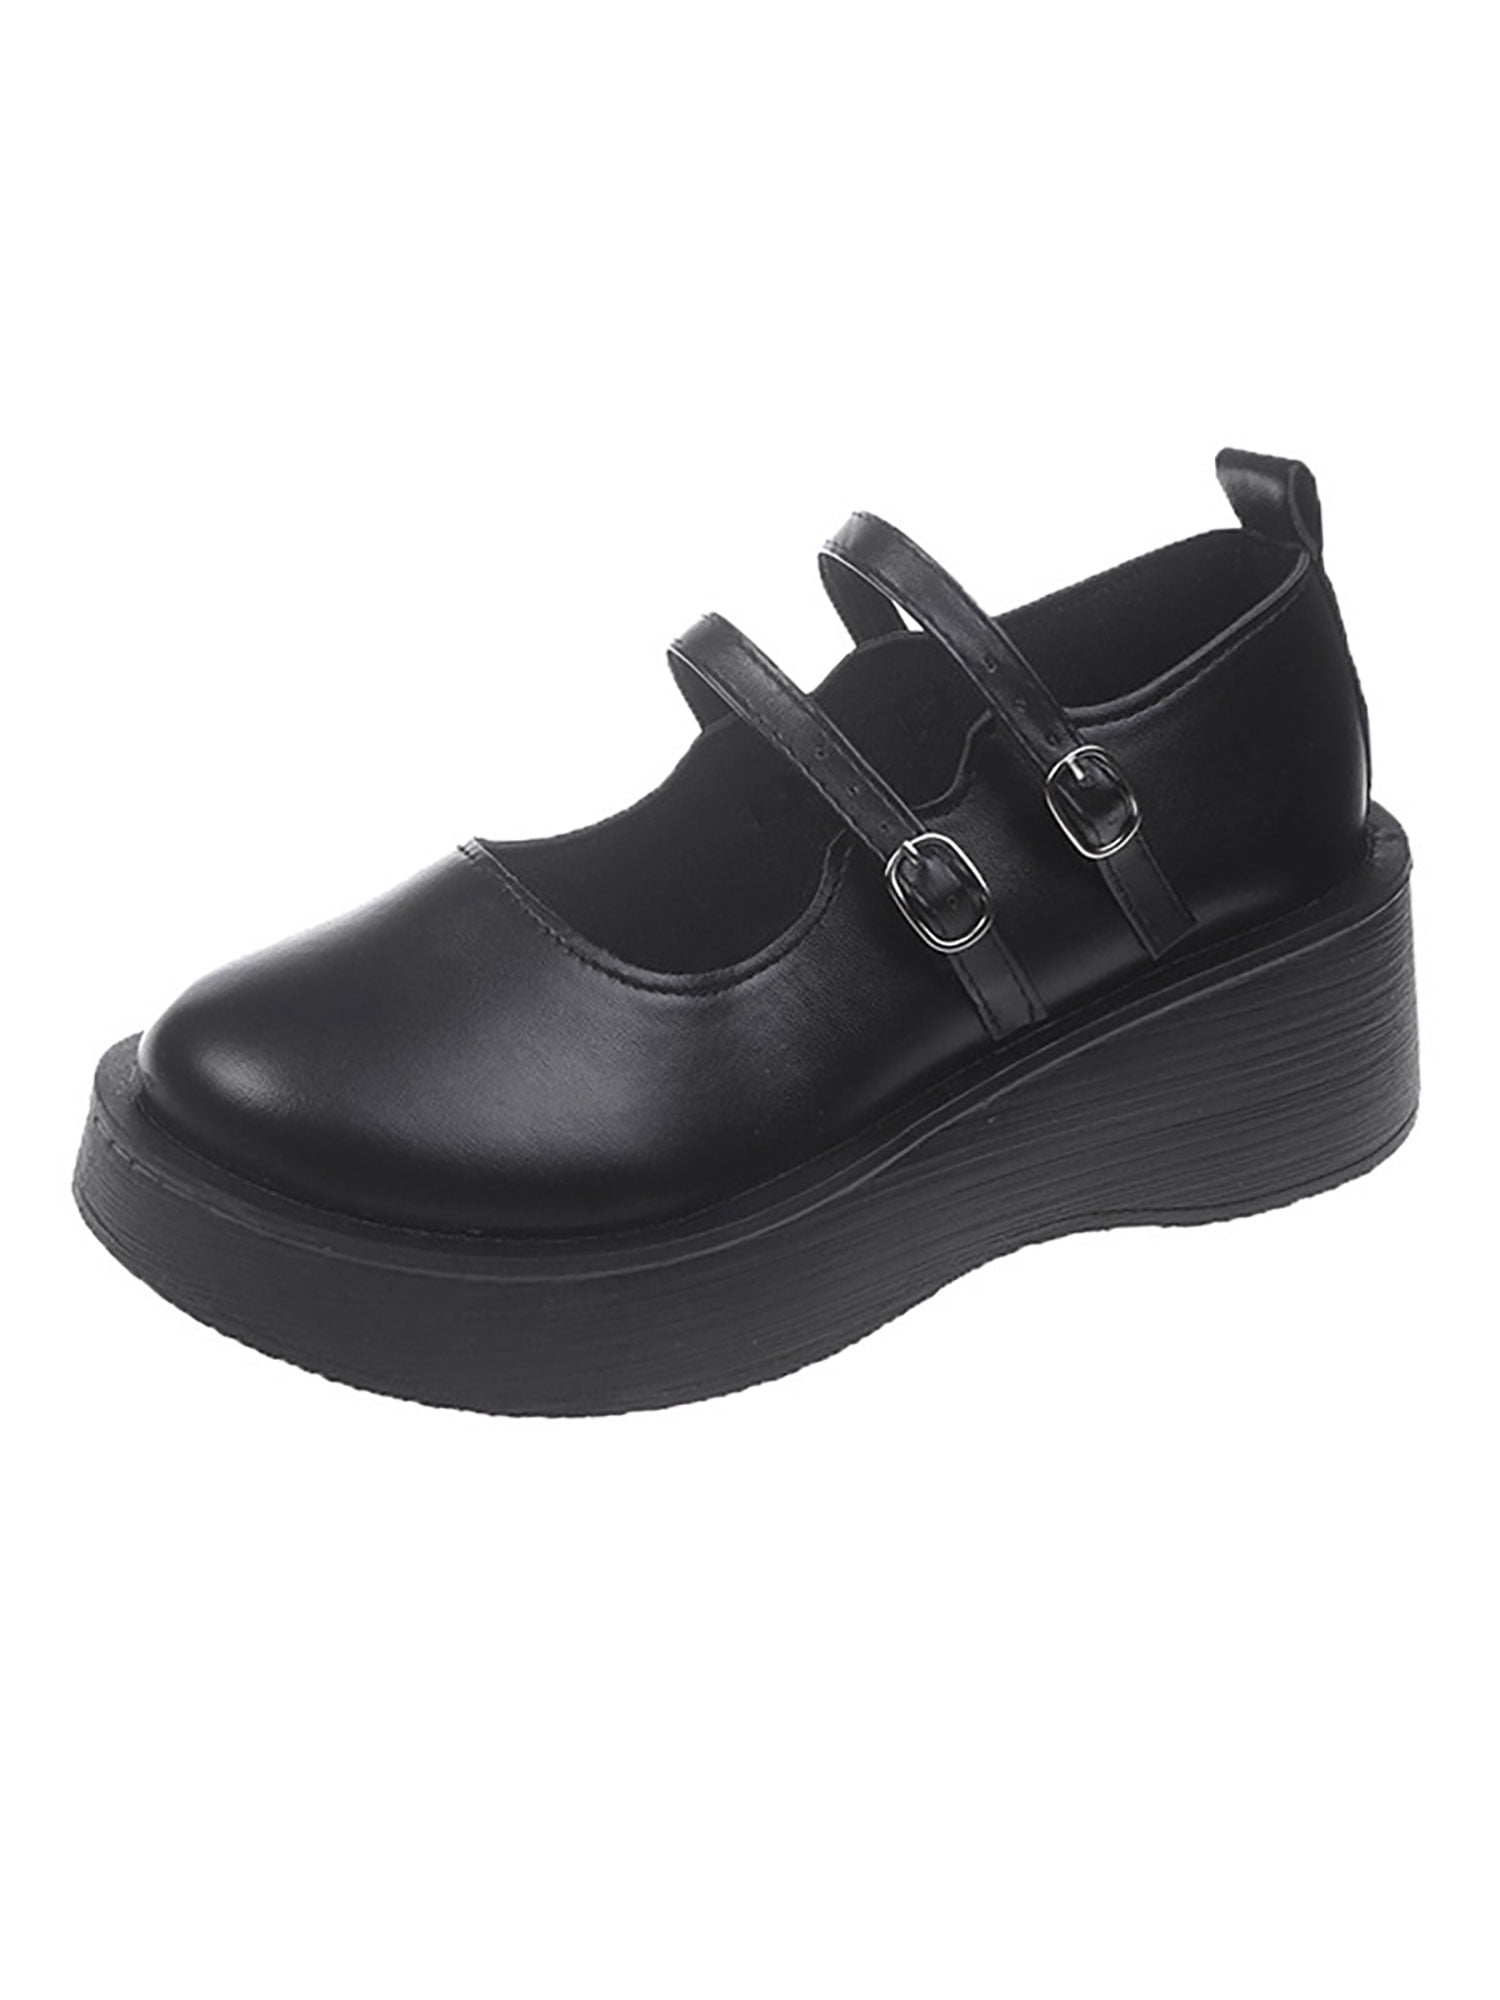 Lacyhop Womens Leather Shoes Ankle Strap Mary Jane Platform Flats Uniform  Lightweight Lolita Shoe Fashion Comfort Pumps Black, Two-Strap  -  